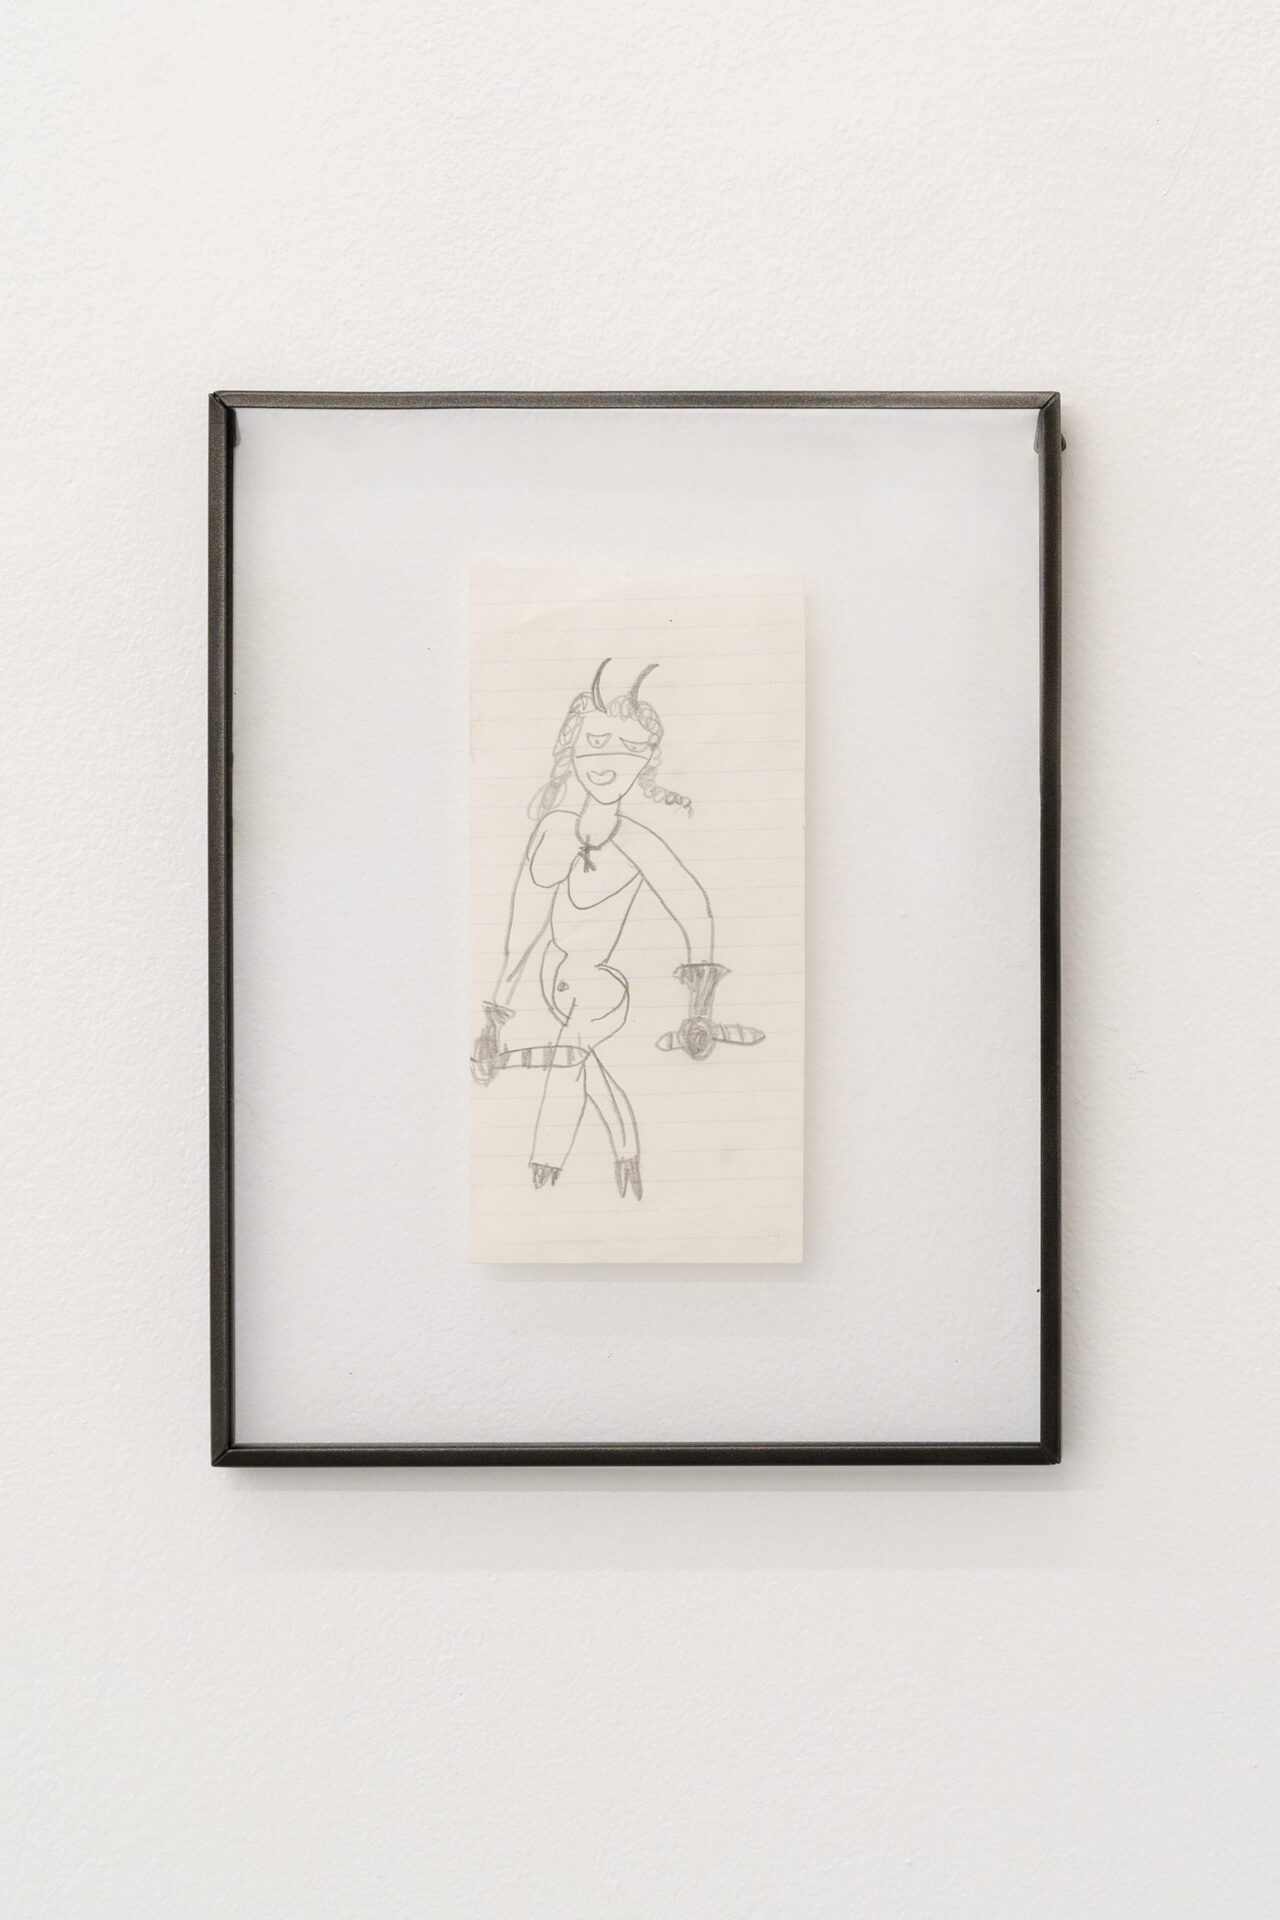 Vanya Venmer, ‘Untitled’, 1997, pencil on paper, 8x16 cm